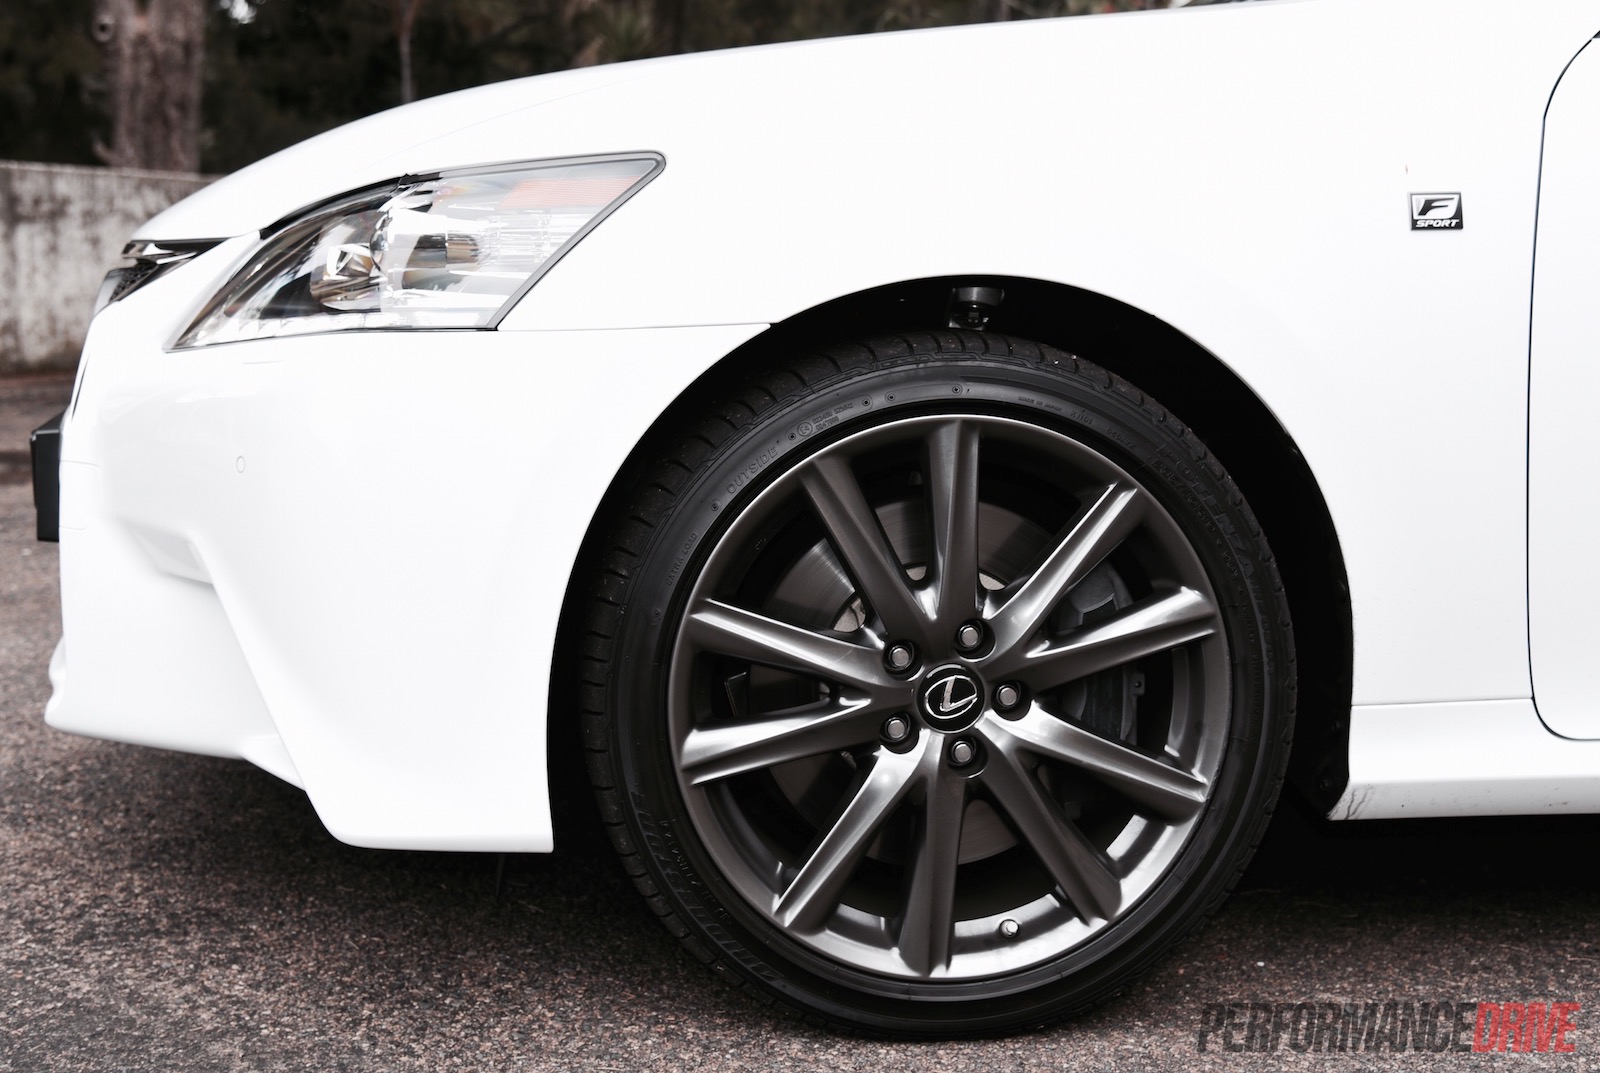 2015 Lexus GS 450h F Sport review (video) - PerformanceDrive